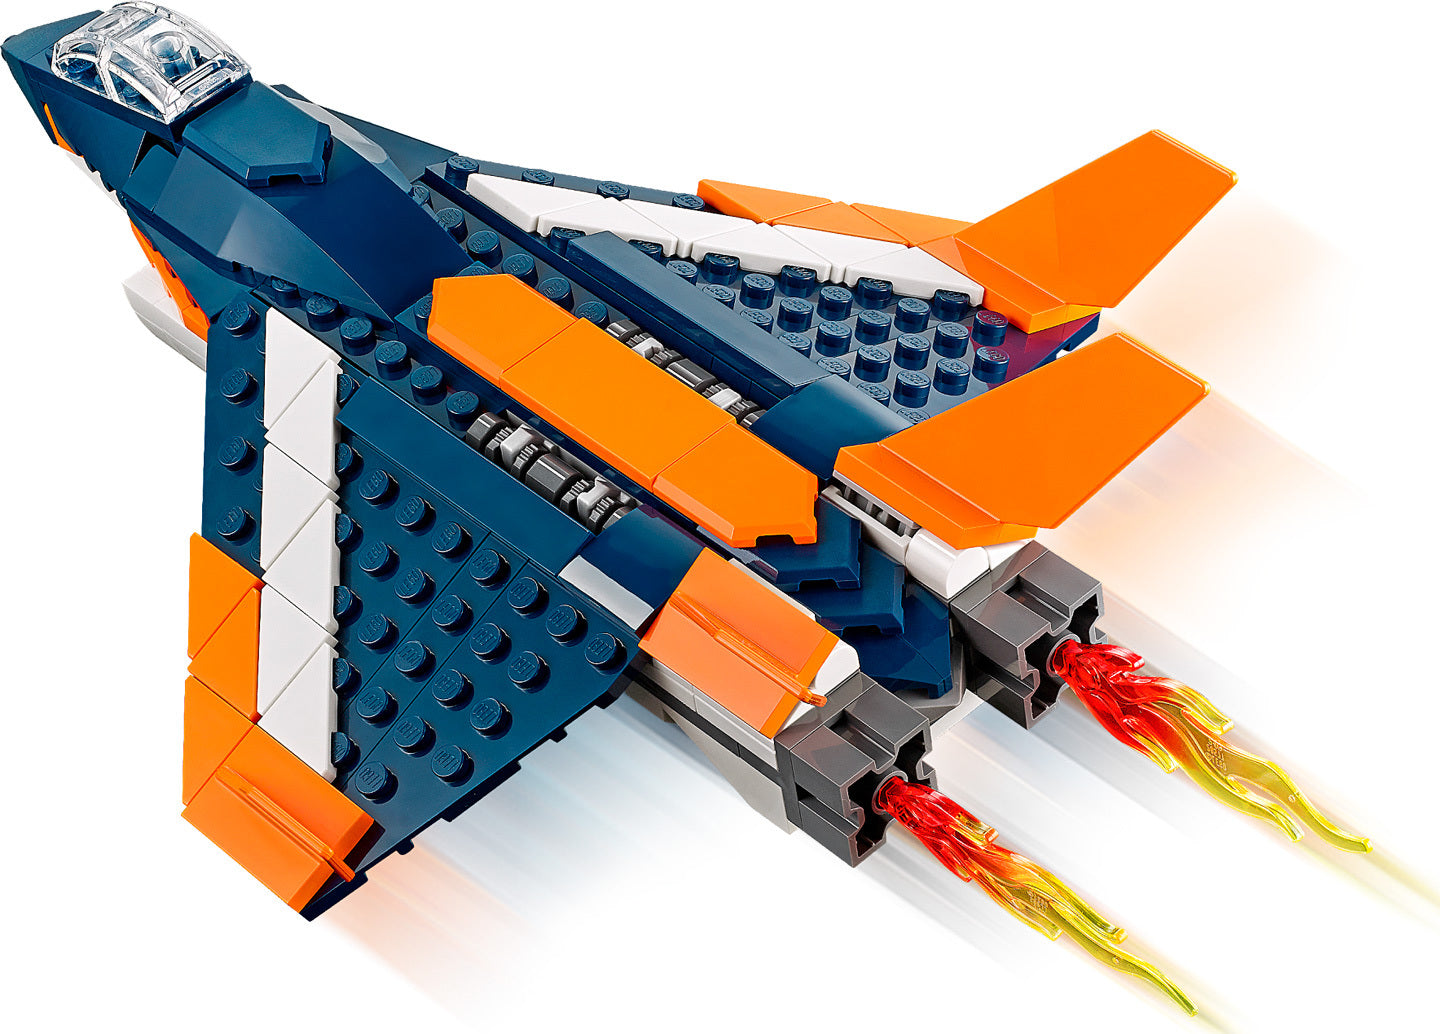 LEGO Creator 3in1: Supersonic-jet